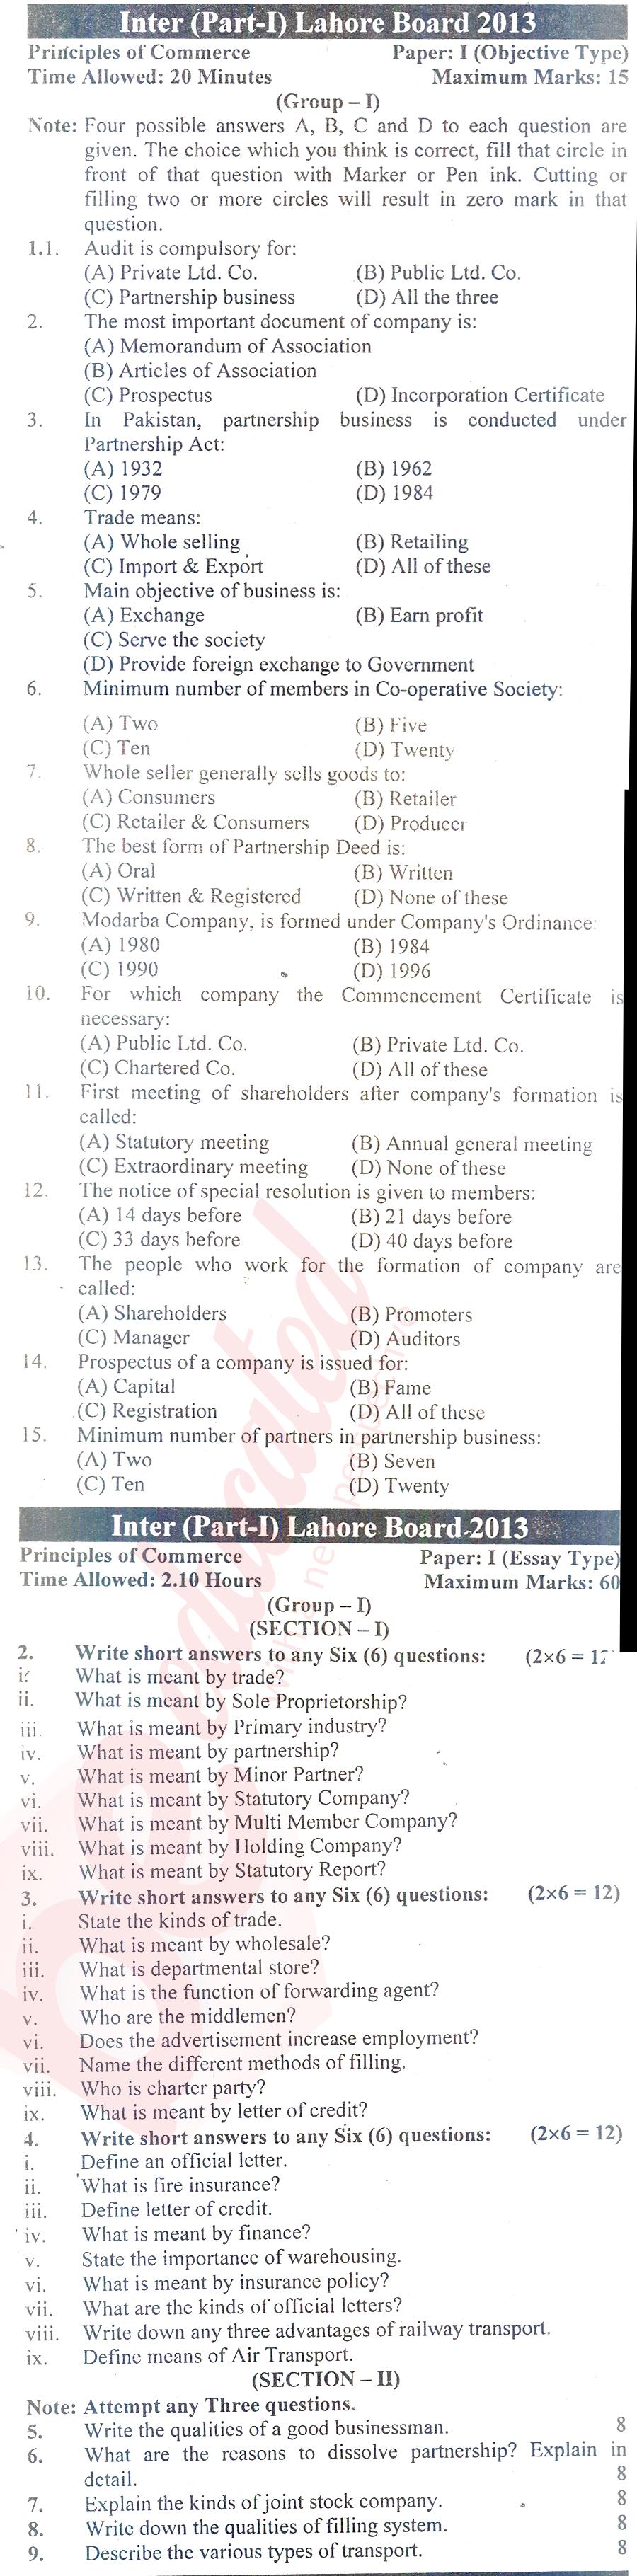 Principles of Commerce ICOM Part 1 Past Paper Group 1 BISE Lahore 2013